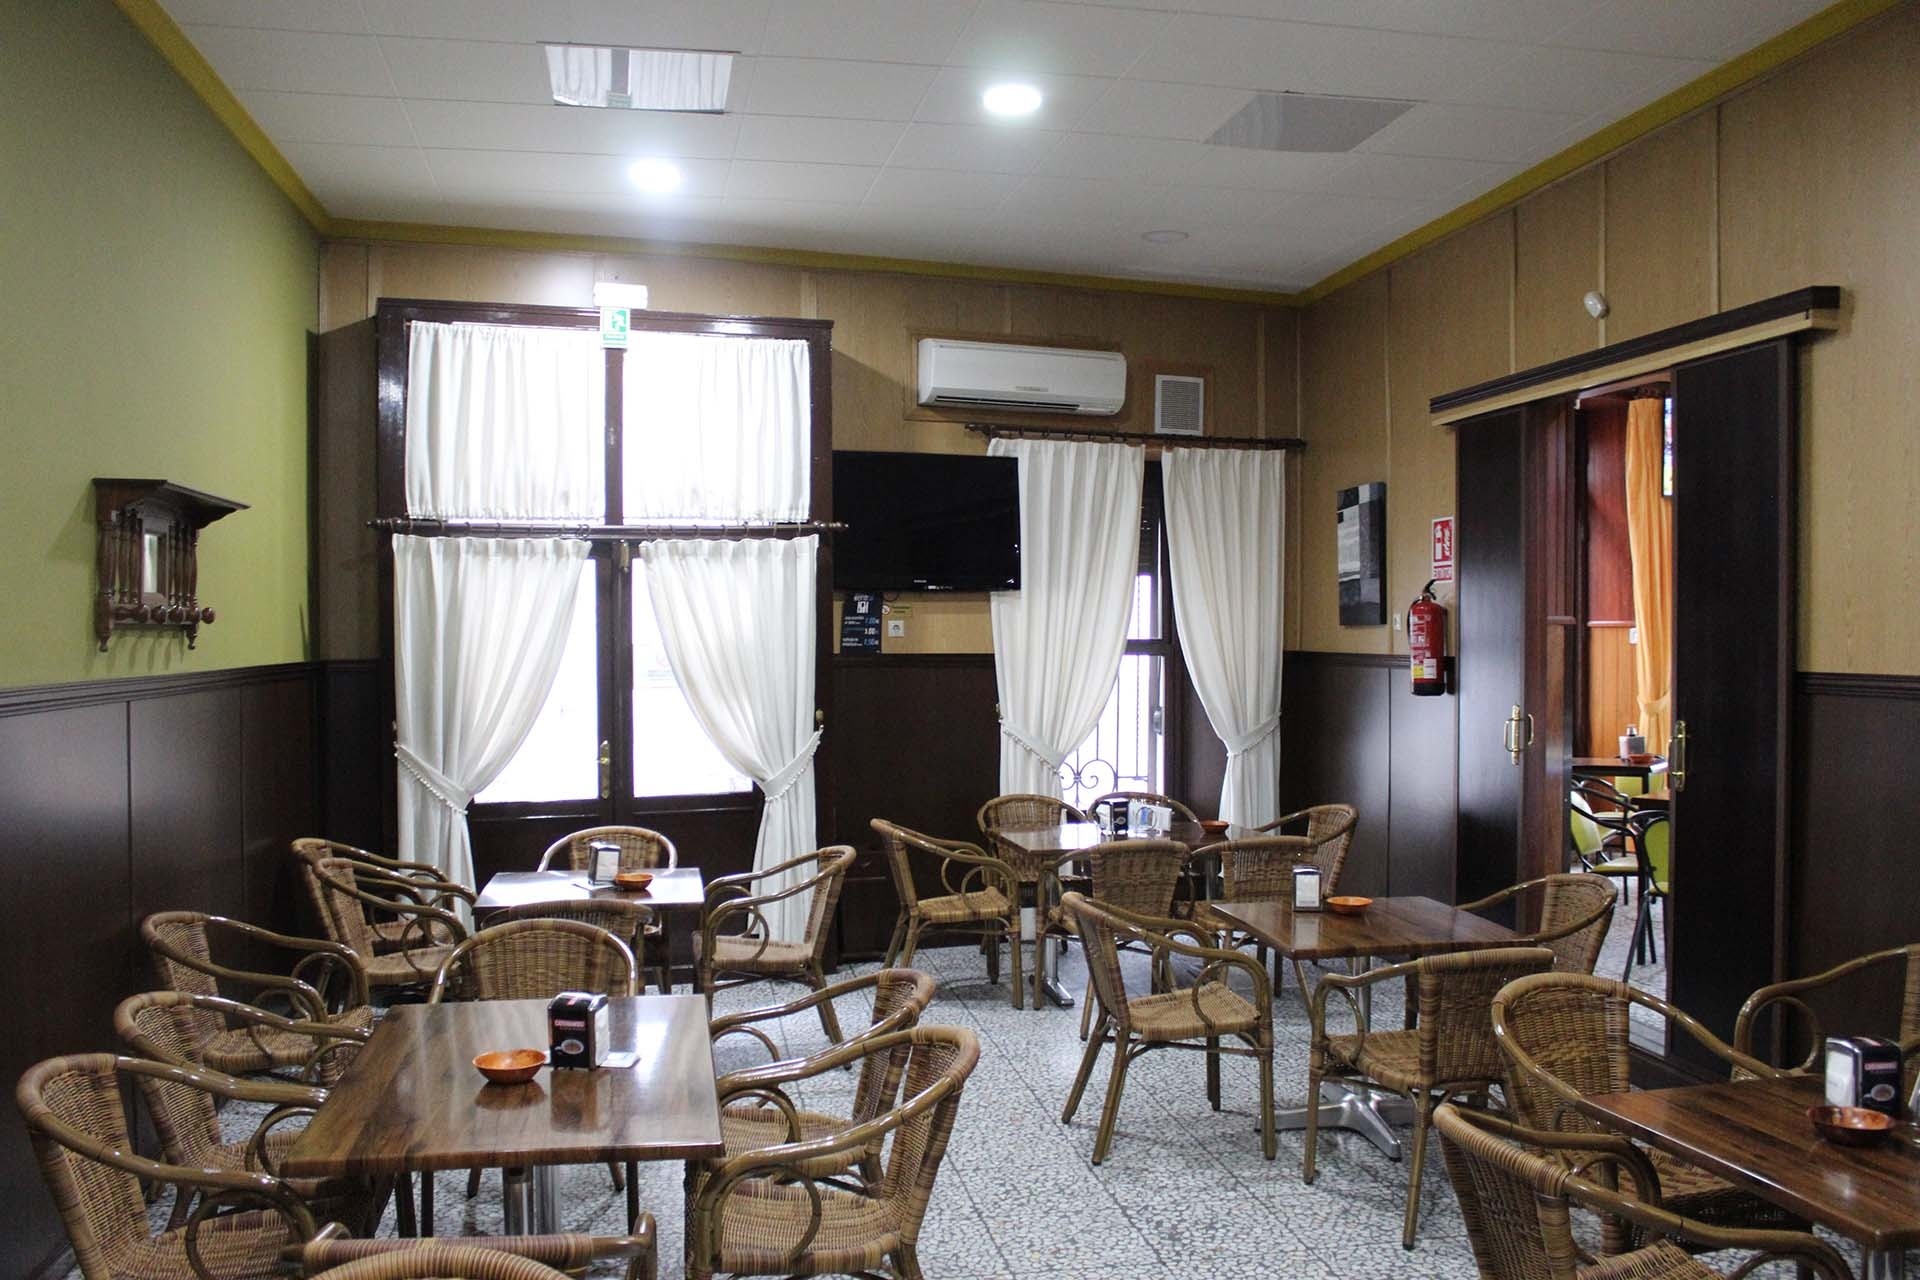 BAR-CAFE-CENTRAL interior